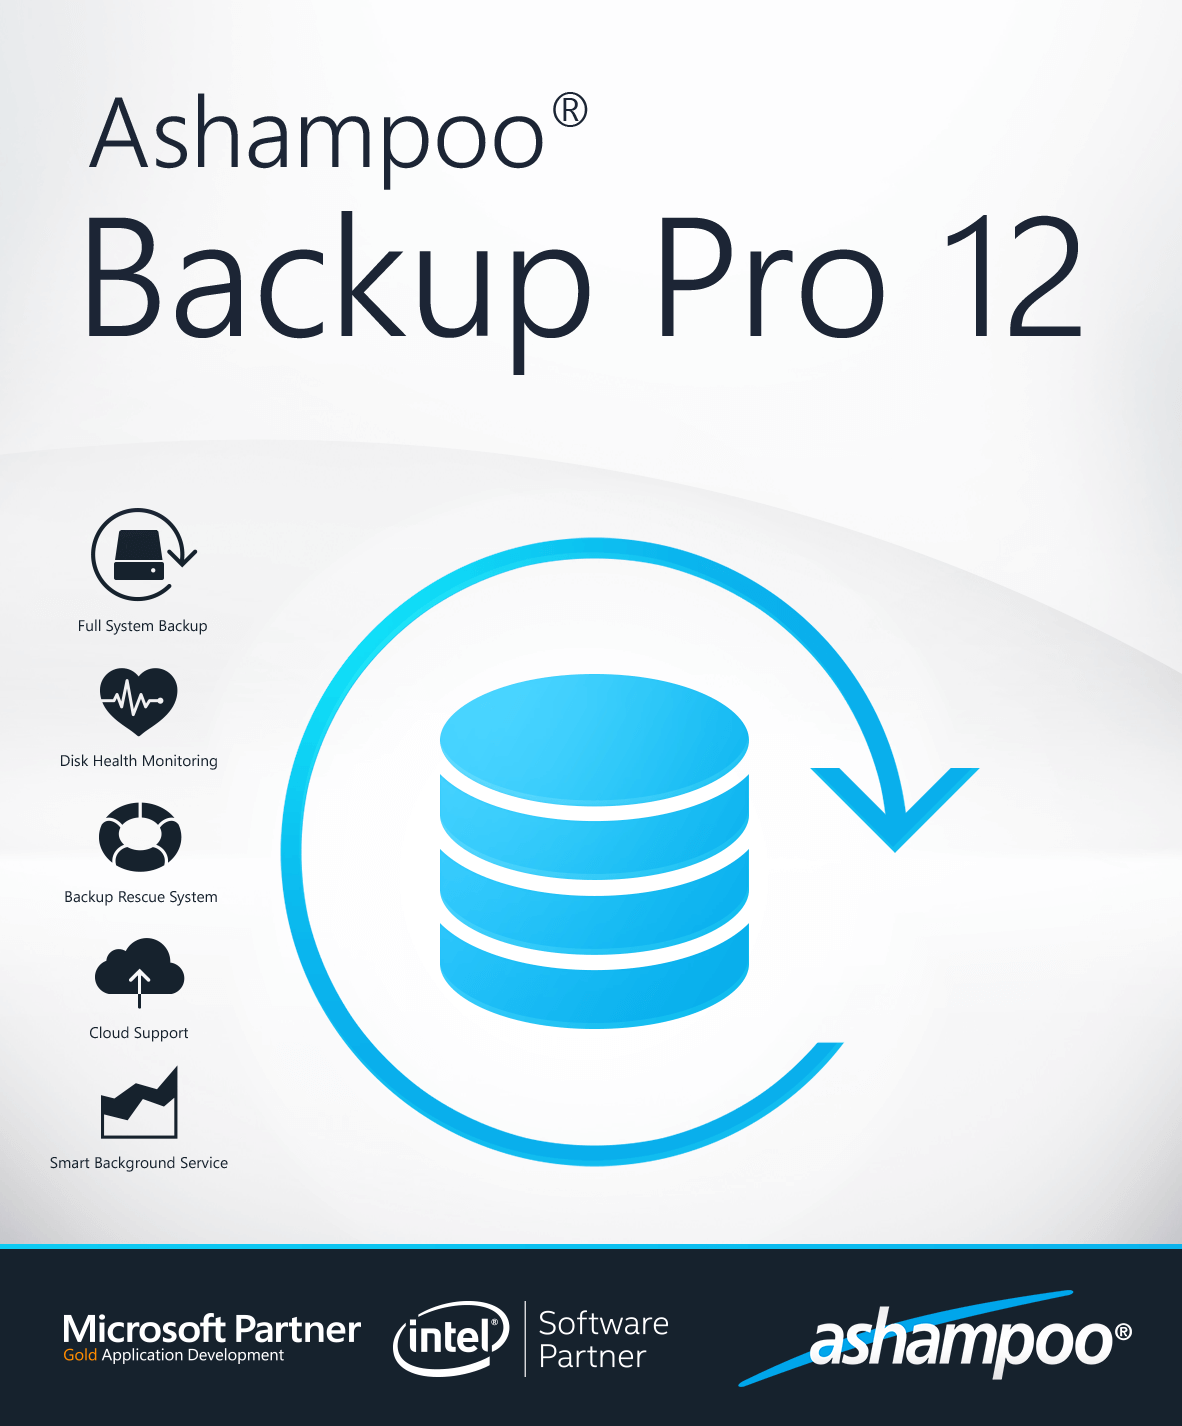 instal the new version for ipod Ashampoo Backup Pro 17.08